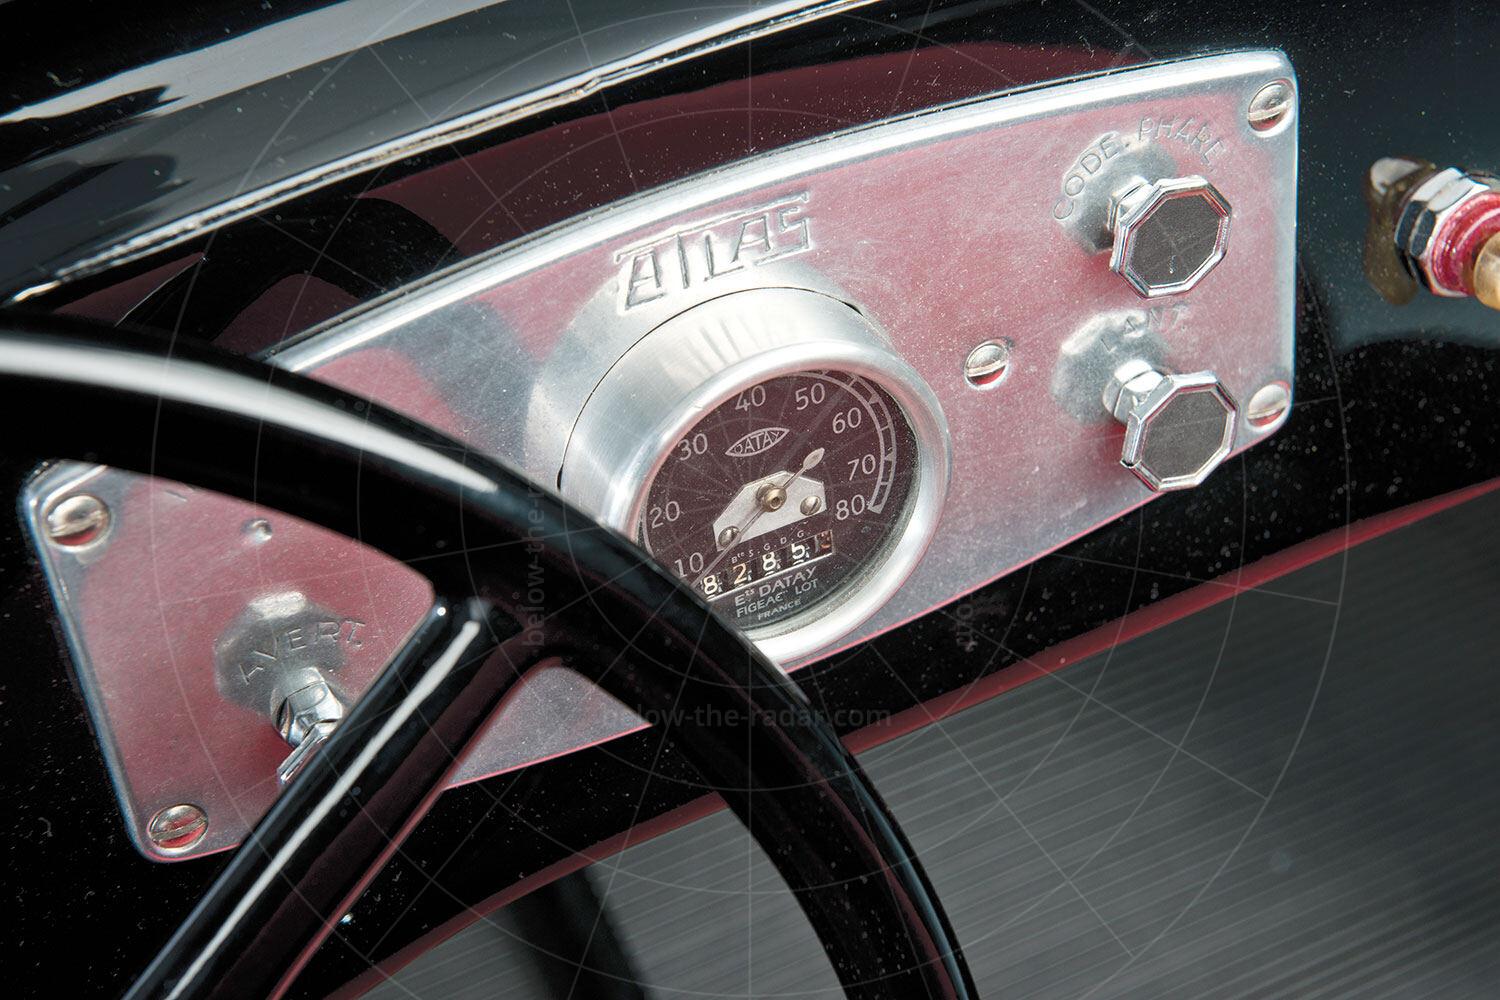 Atlas Babycar dashboard Pic: RM Sotheby's | Atlas Babycar dashboard